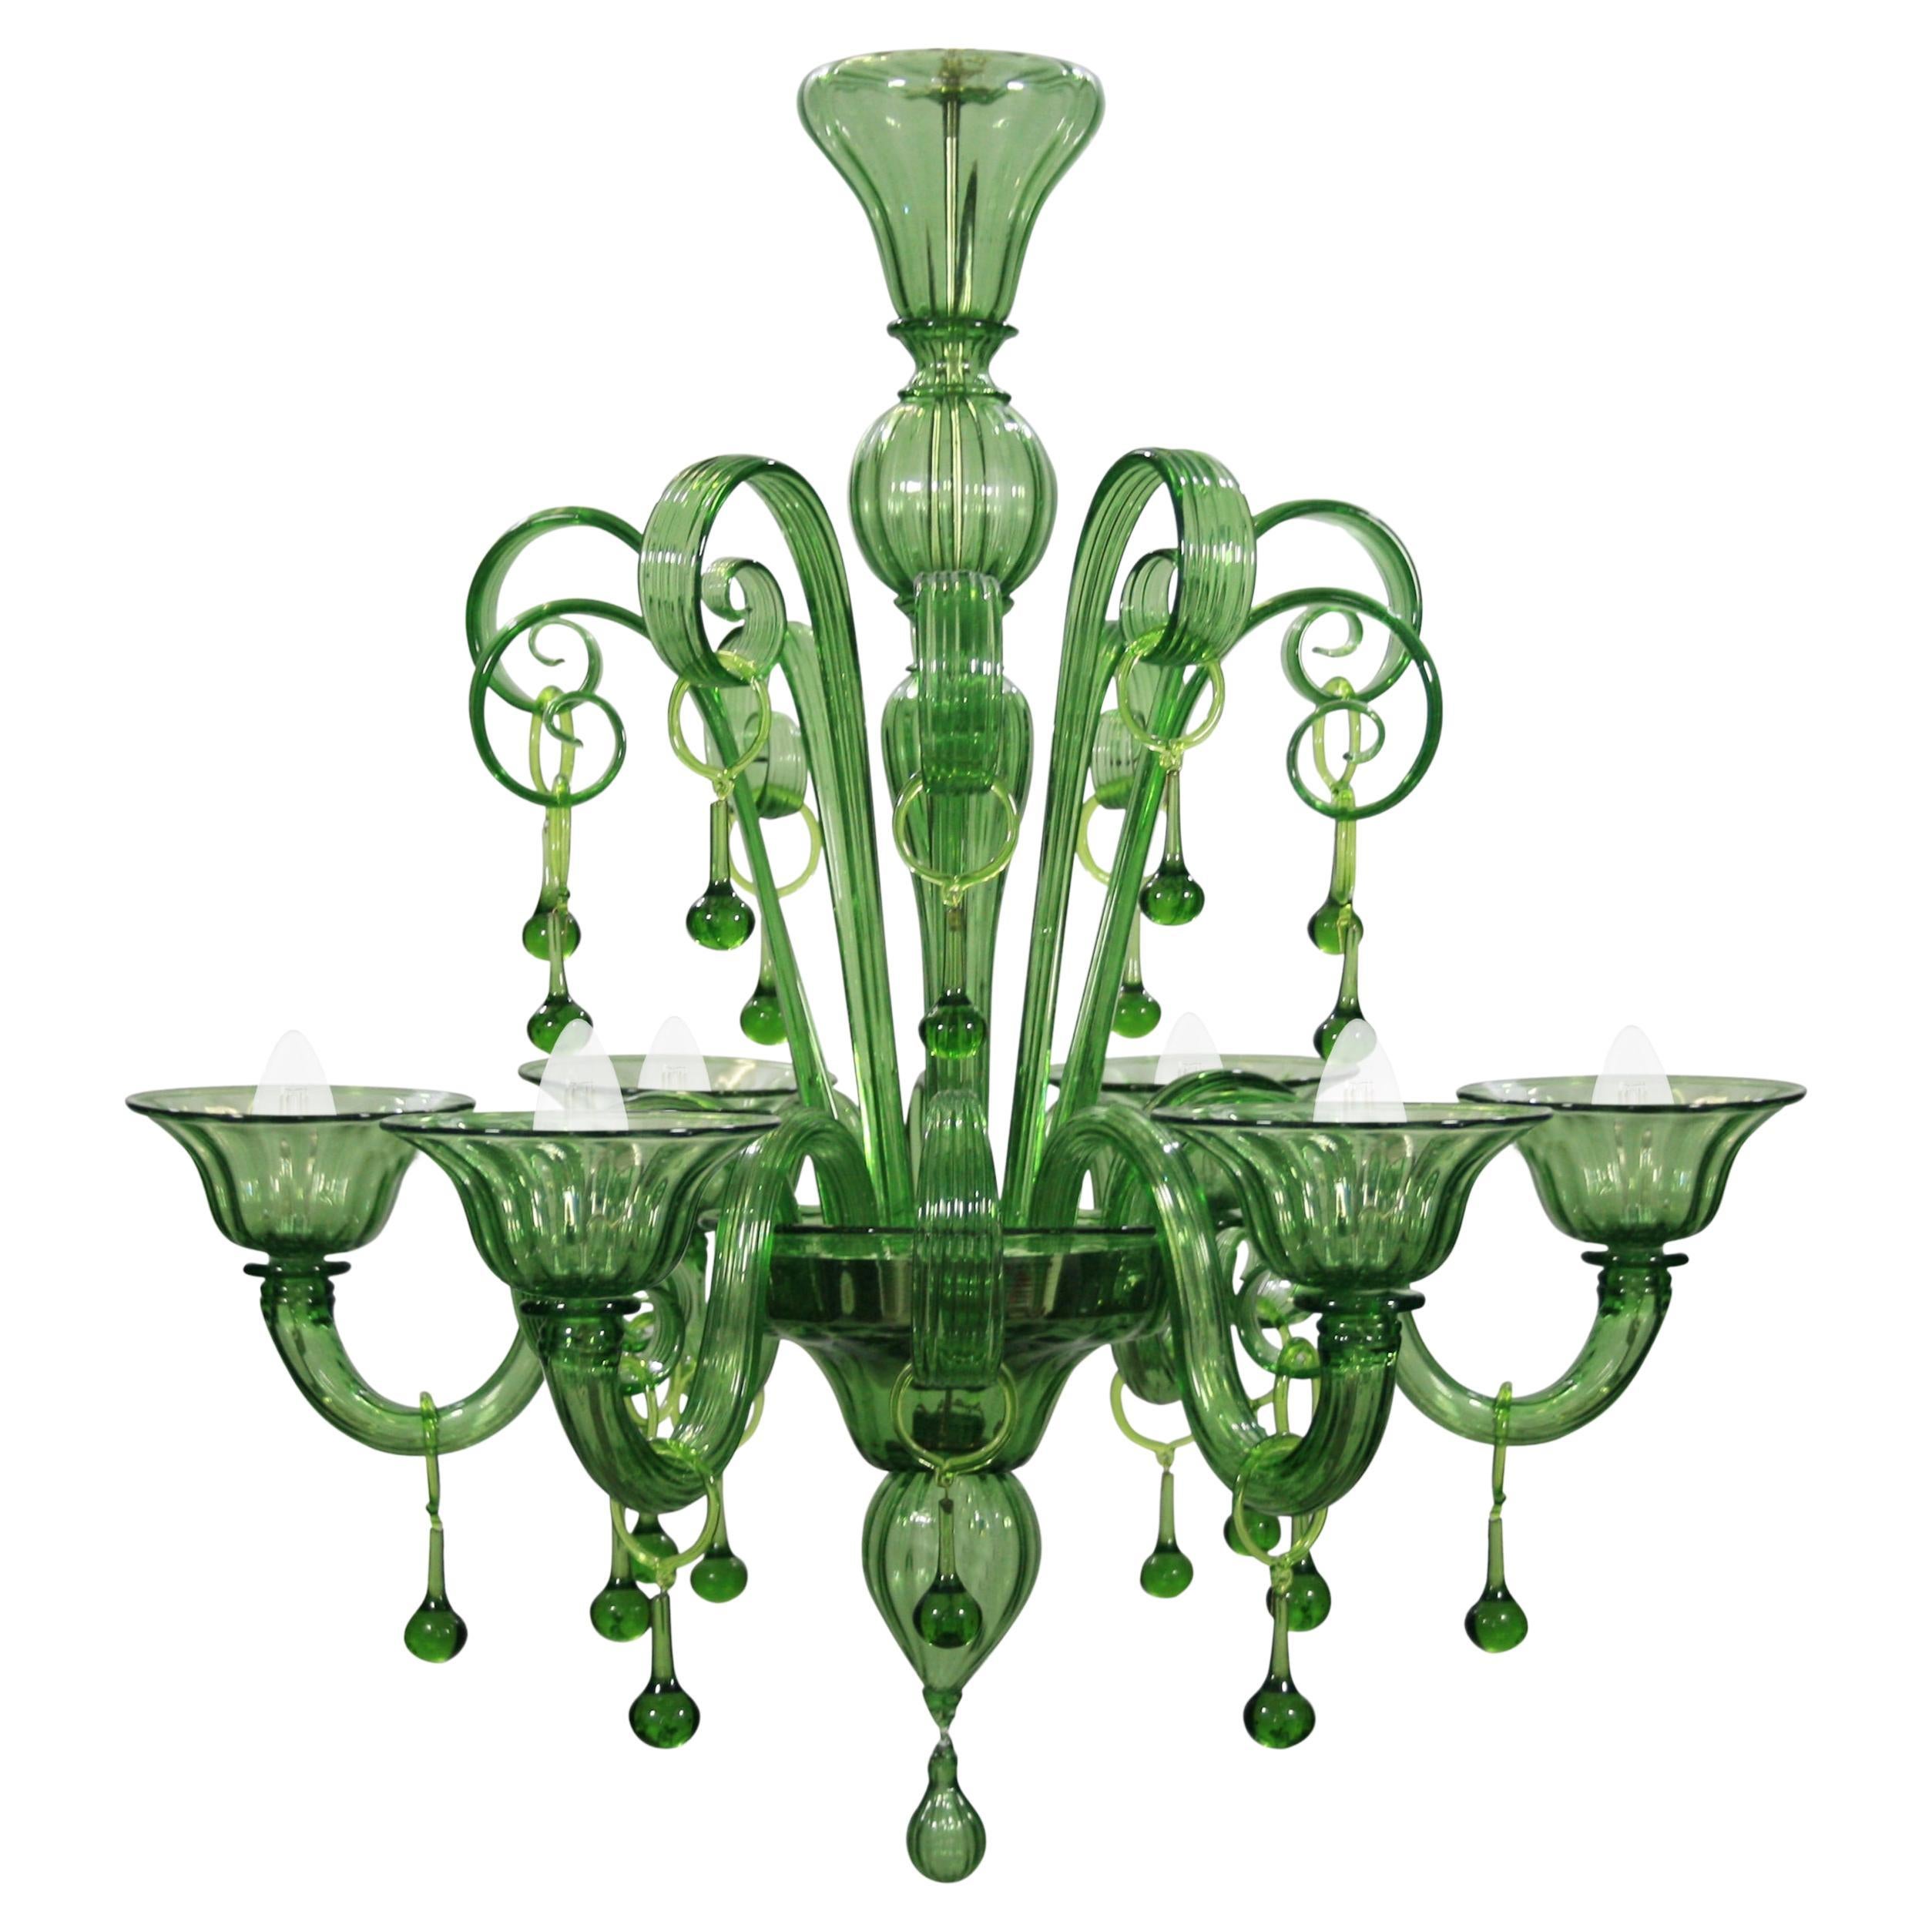 Rich Chandelier 6 Arms Green Handblown Artistic Murano Glass by Multiforme